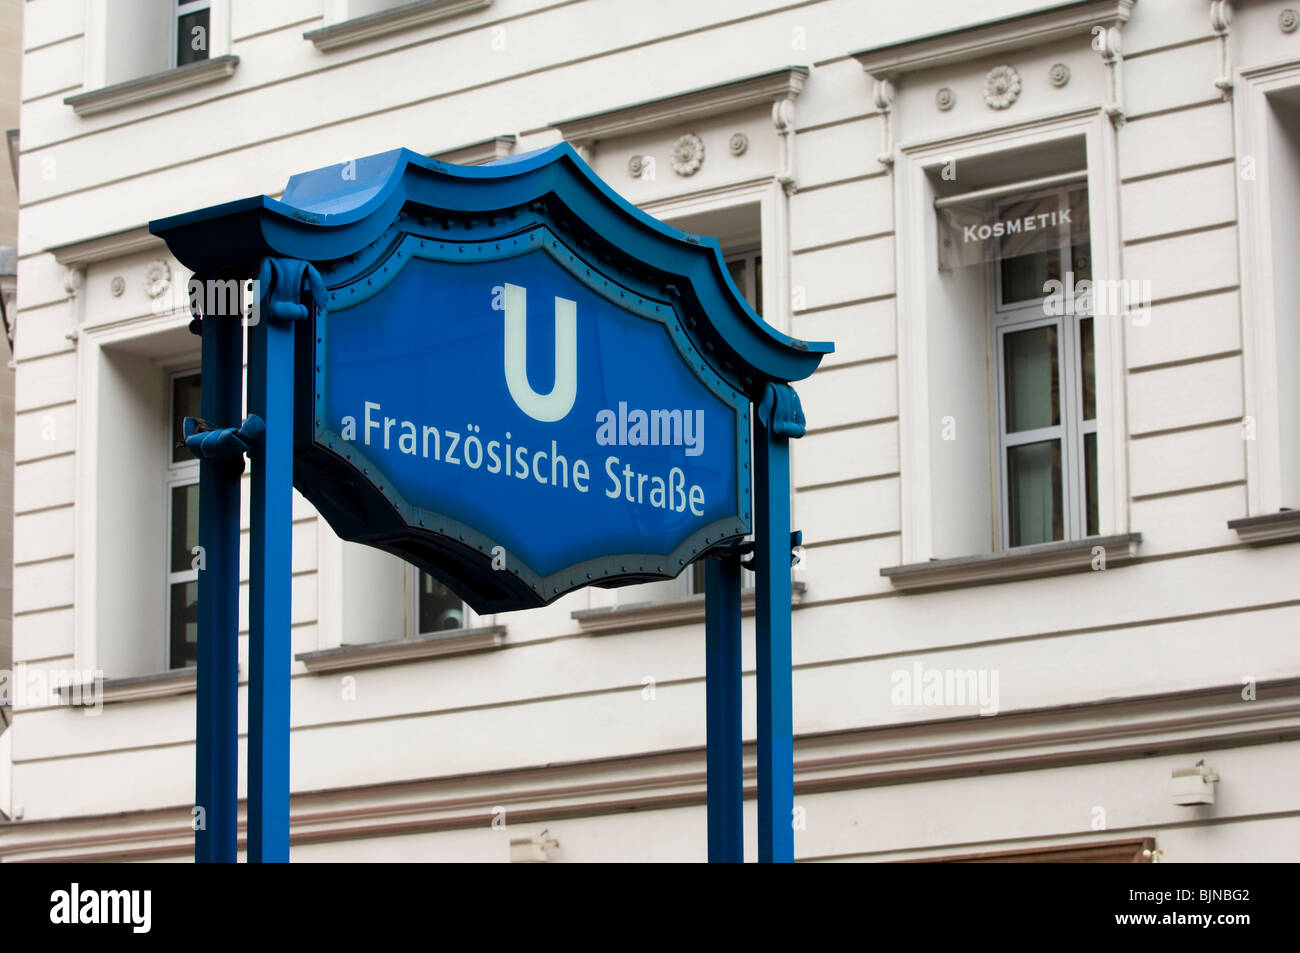 Franzosische Ubahn subway station sign on Friedrichstrasse Berlin Germany Stock Photo